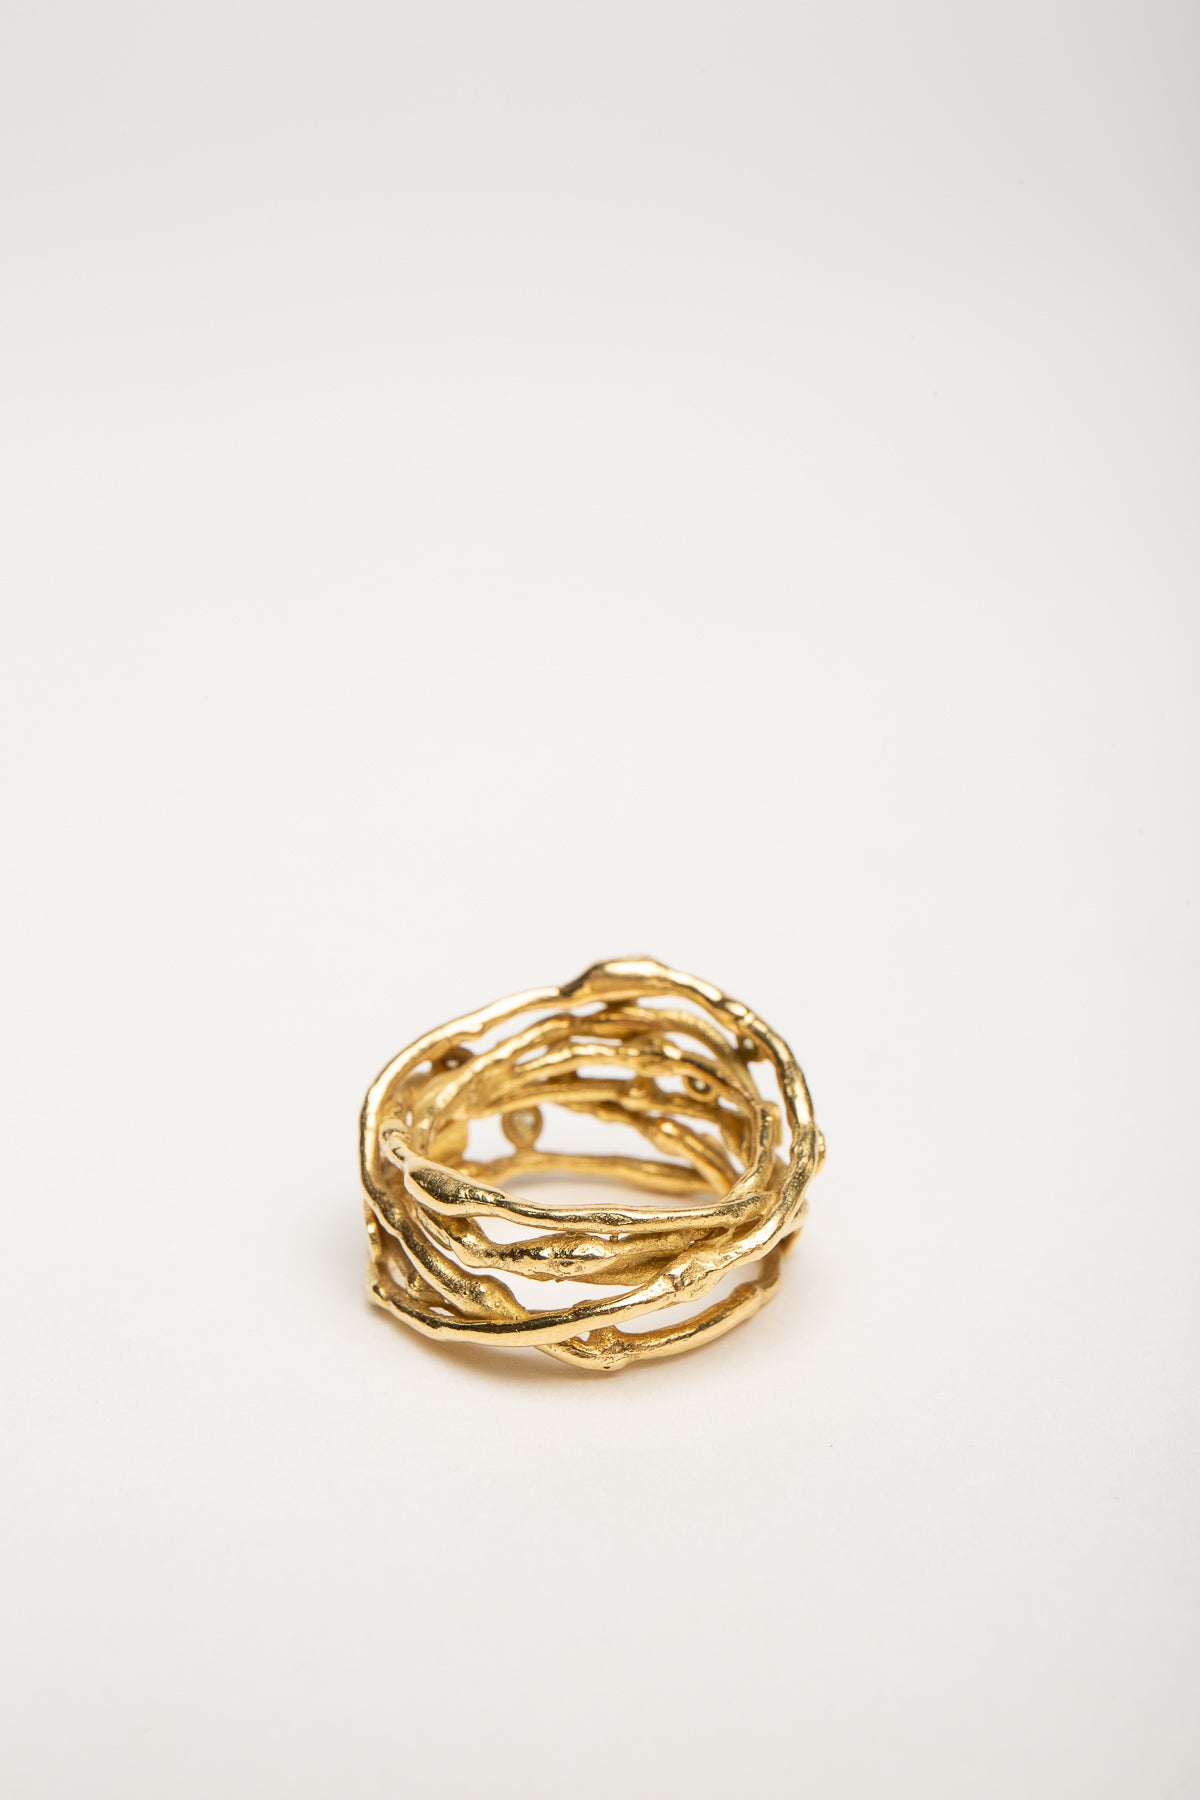 BOAZ KASHI | 18K GOLD DIAMOND BRANCH RING